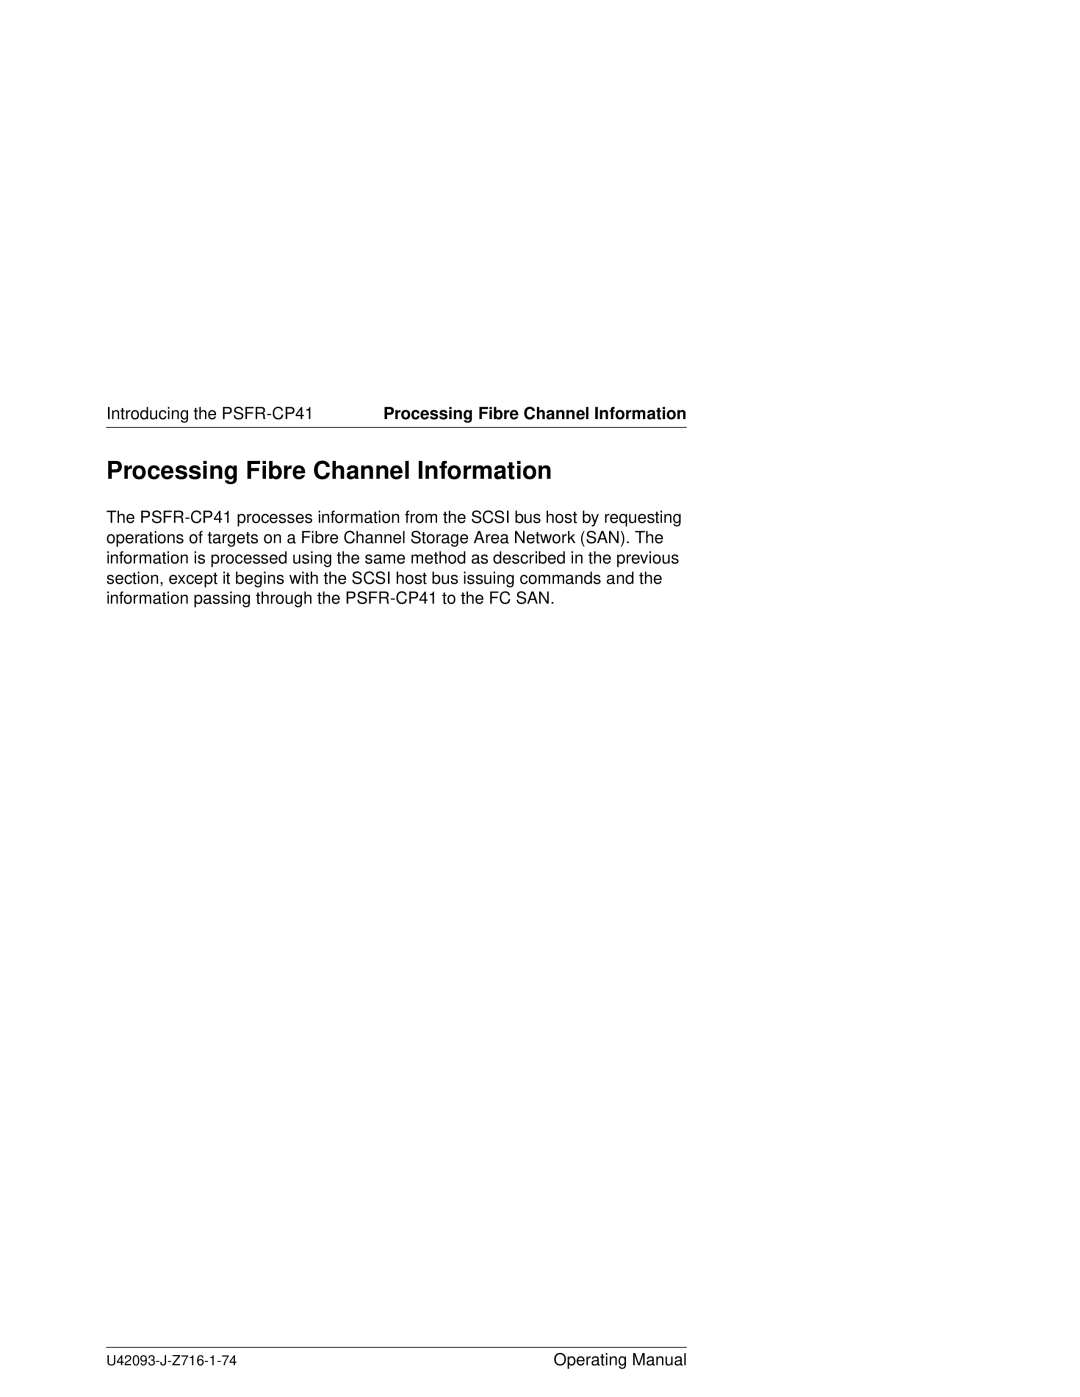 Siemens PSFR-CP41 manual Processing Fibre Channel Information 